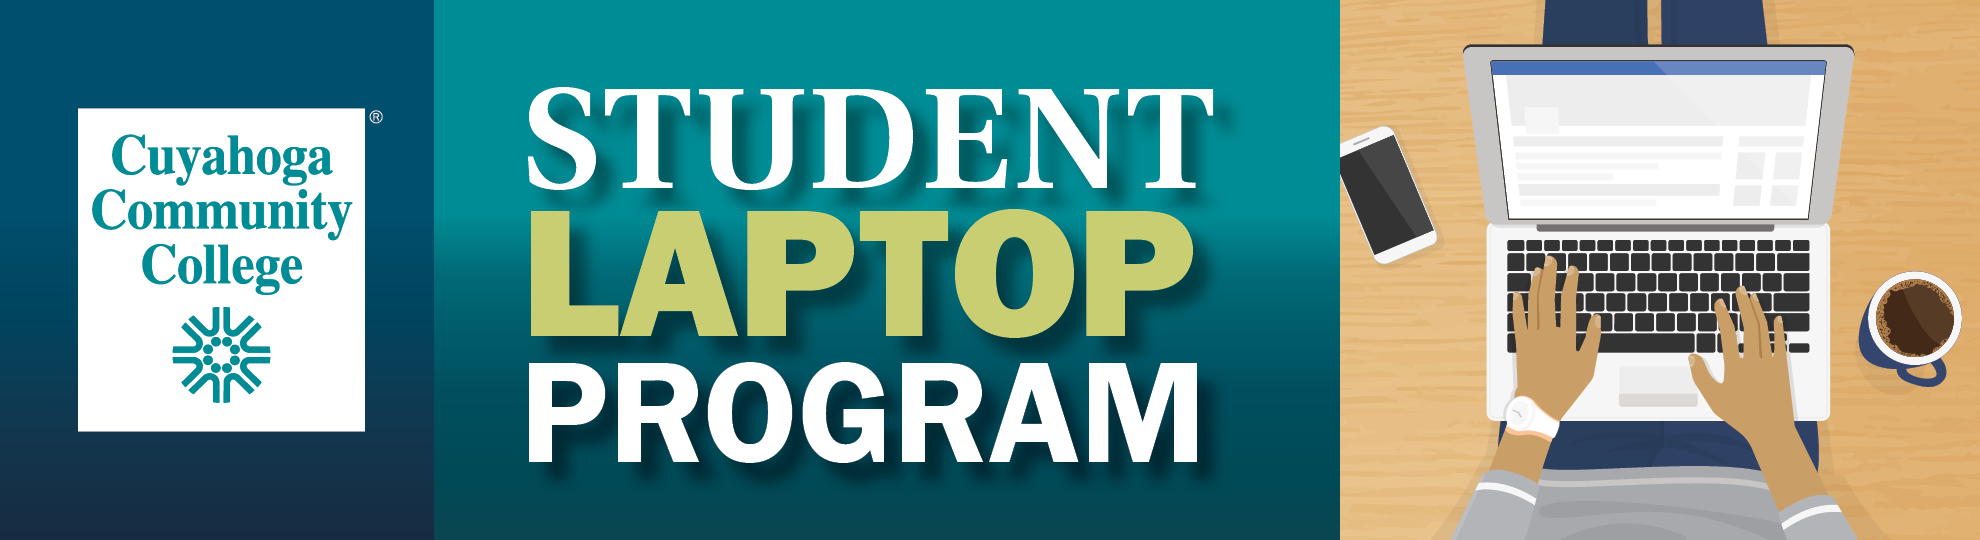 Student Laptop Program